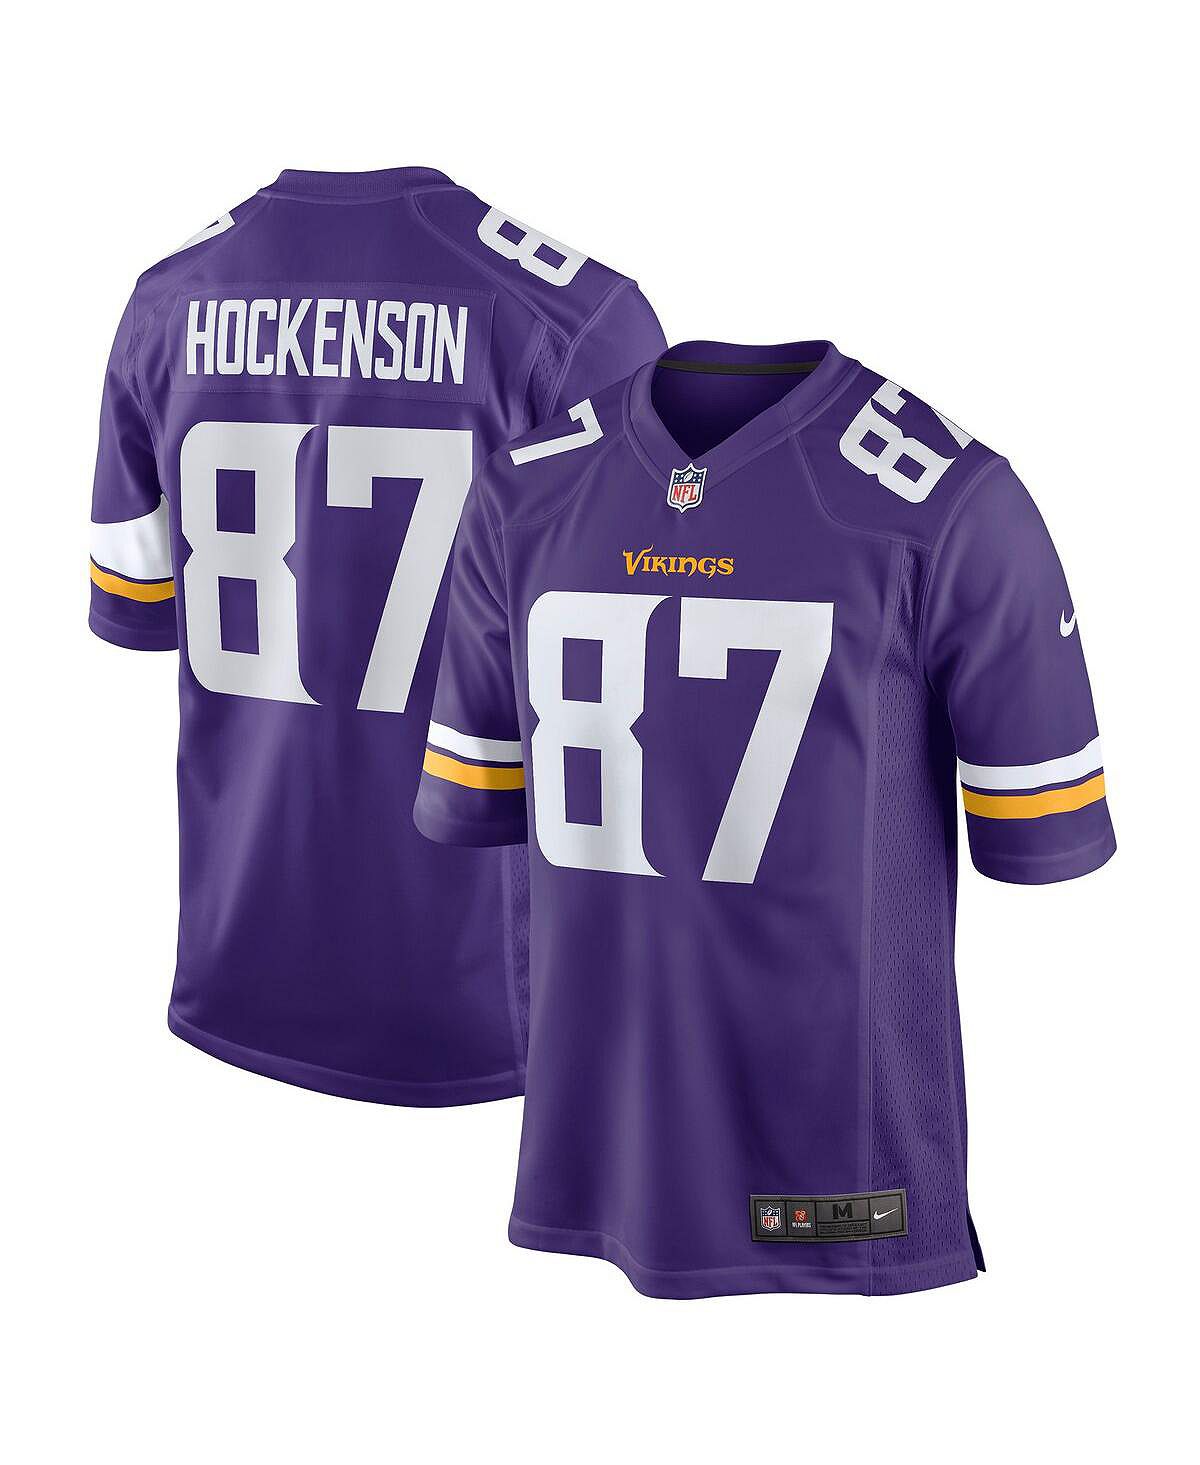 Мужские футболки t.j. джерси hockenson purple minnesota vikings game player Nike, фиолетовый